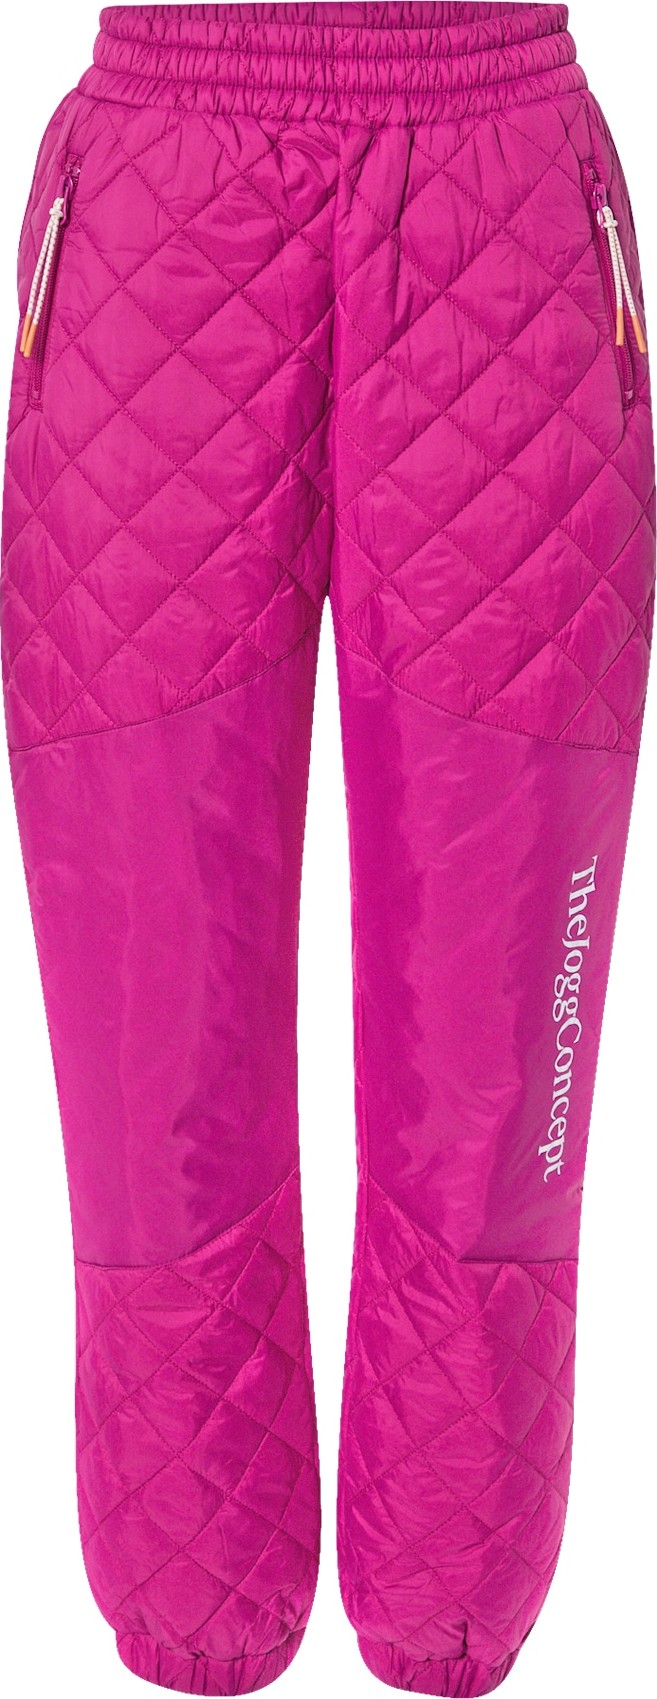 The Jogg Concept Kalhoty 'BERRI' pink / fuchsiová / bílá